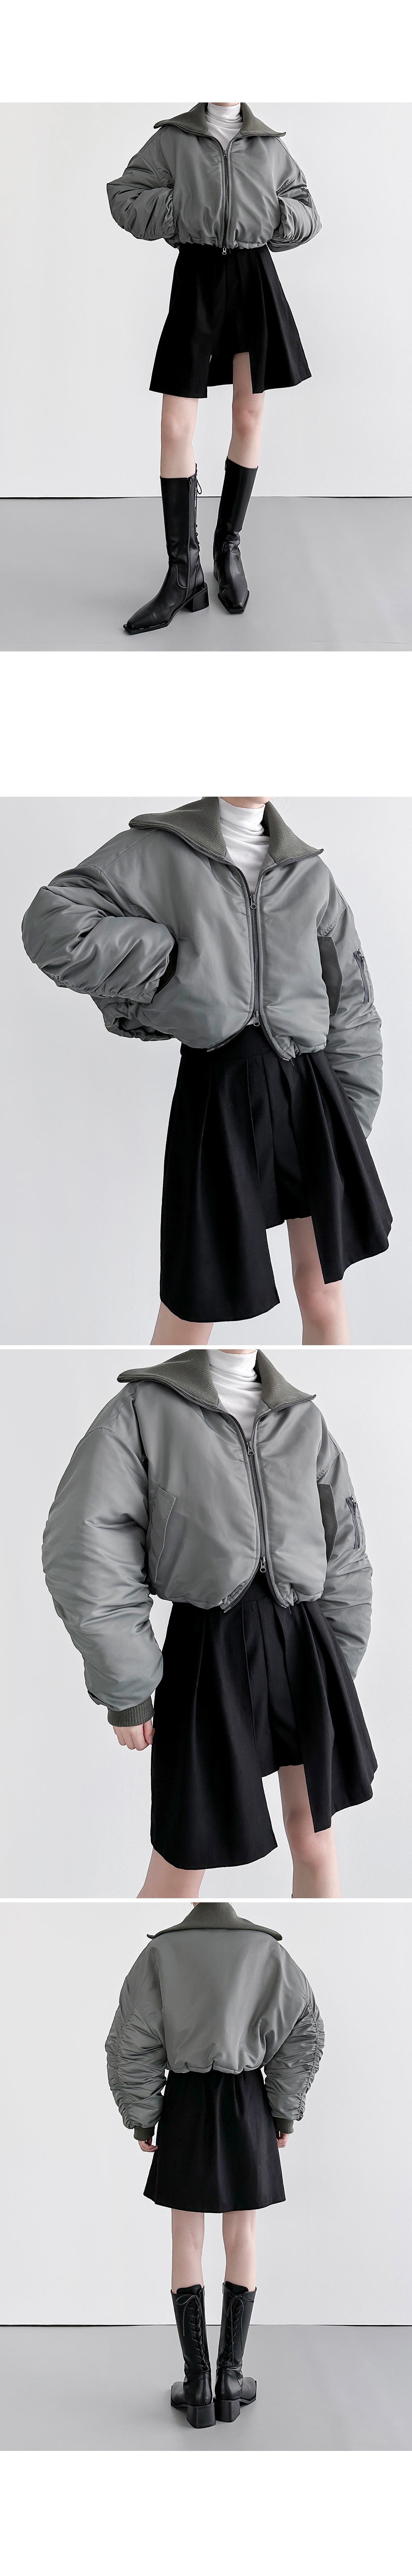 jacket grey color image-S1L7